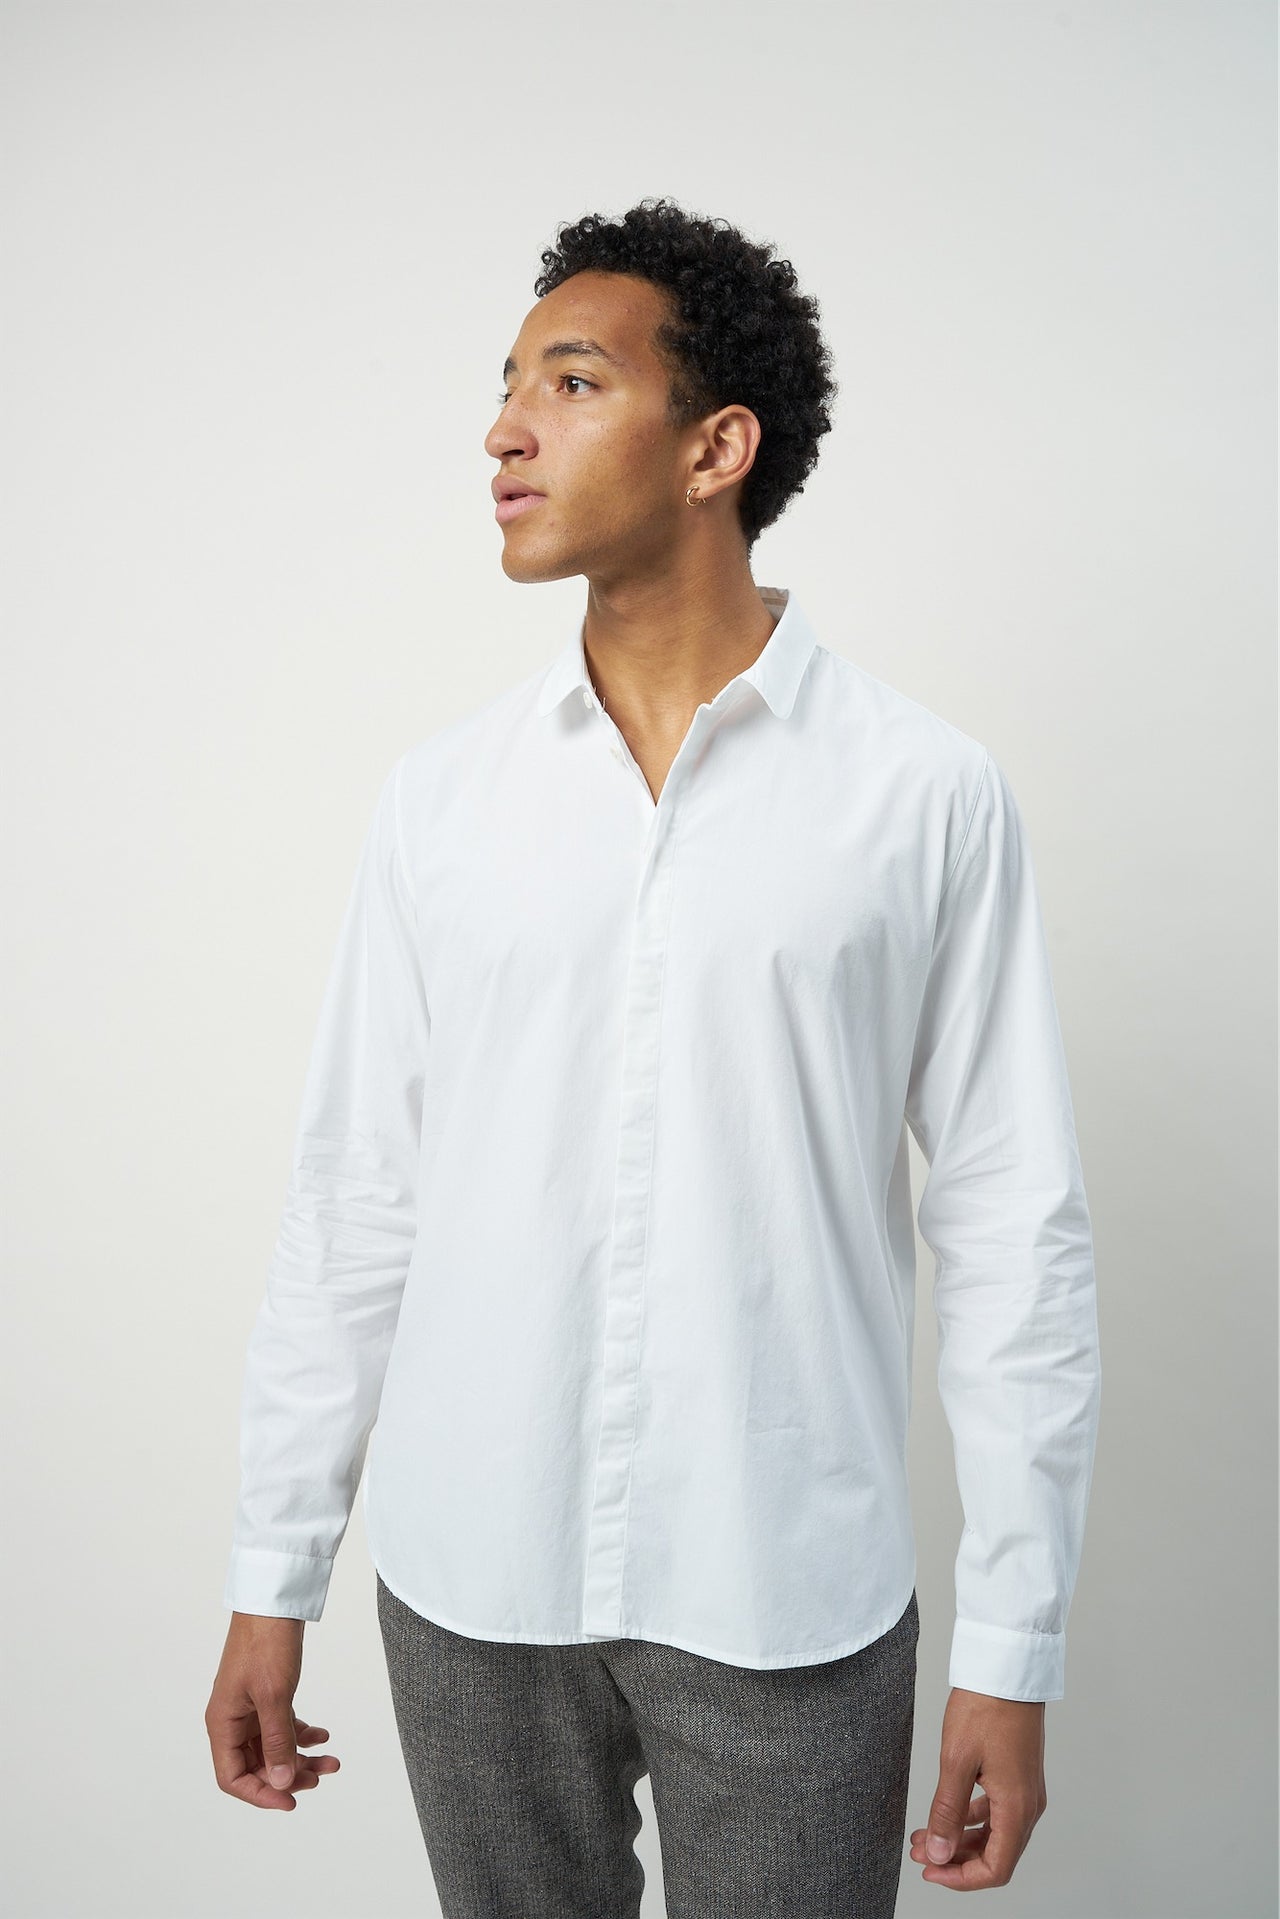 Cute Round Collar Shirt in a White Fine Organic Portuguese Cotton